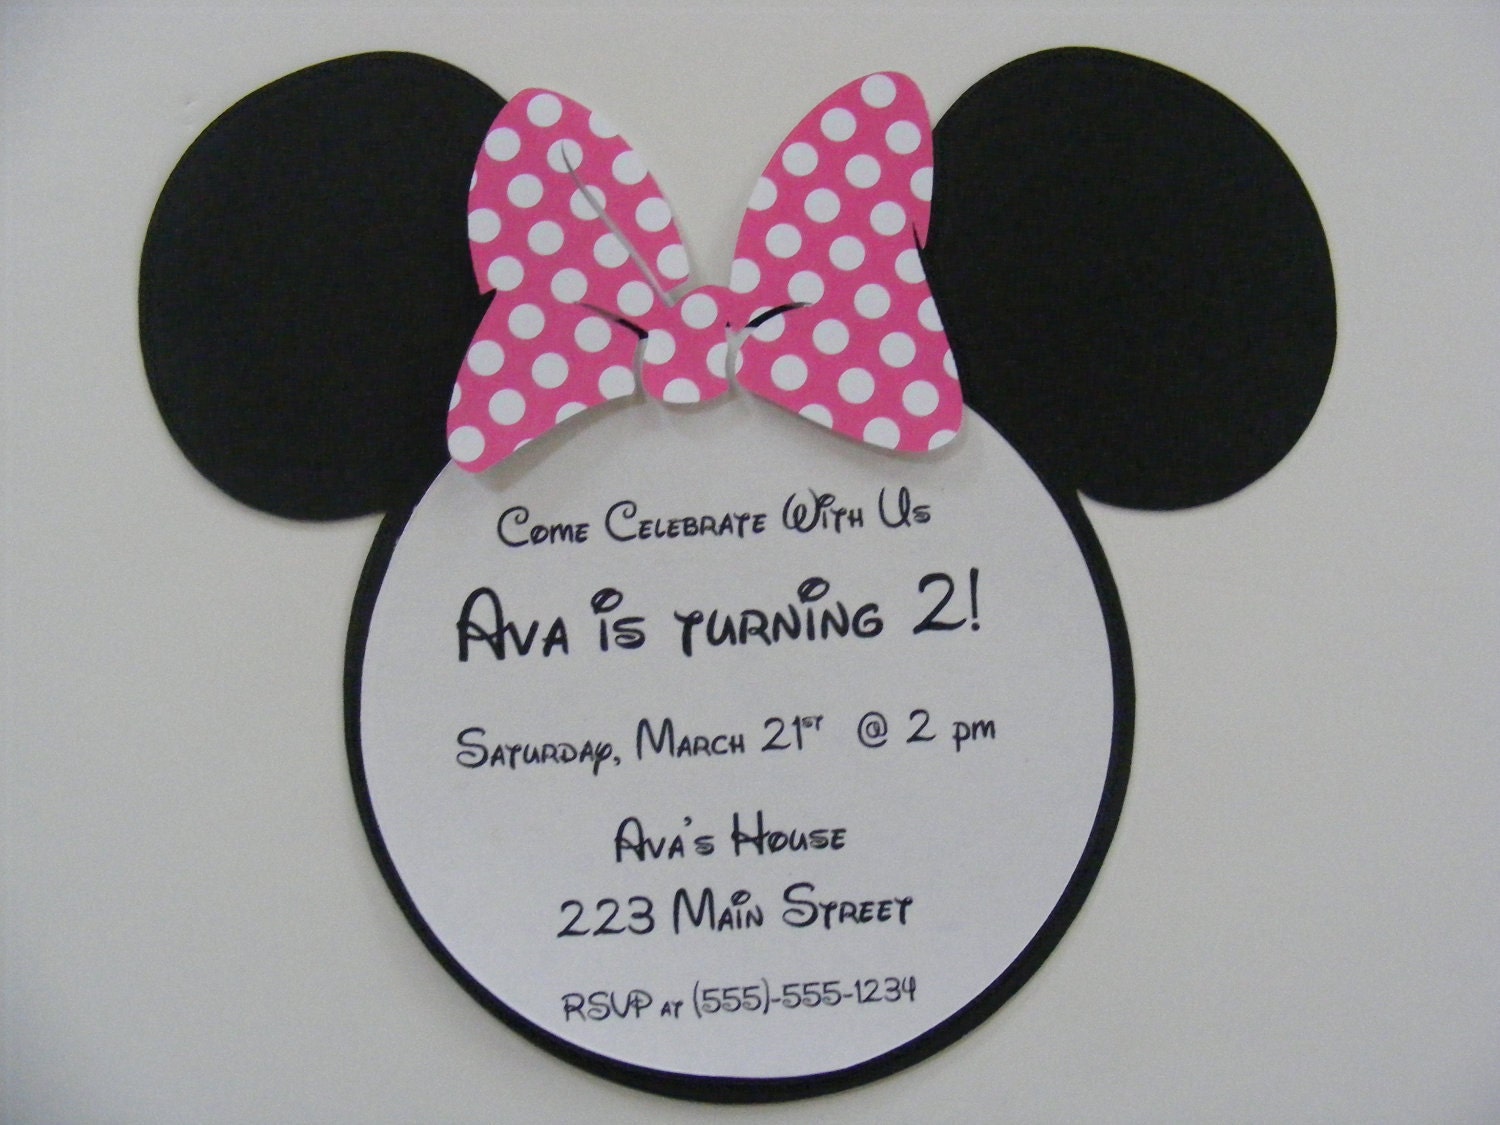 Minnie Mouse Invites